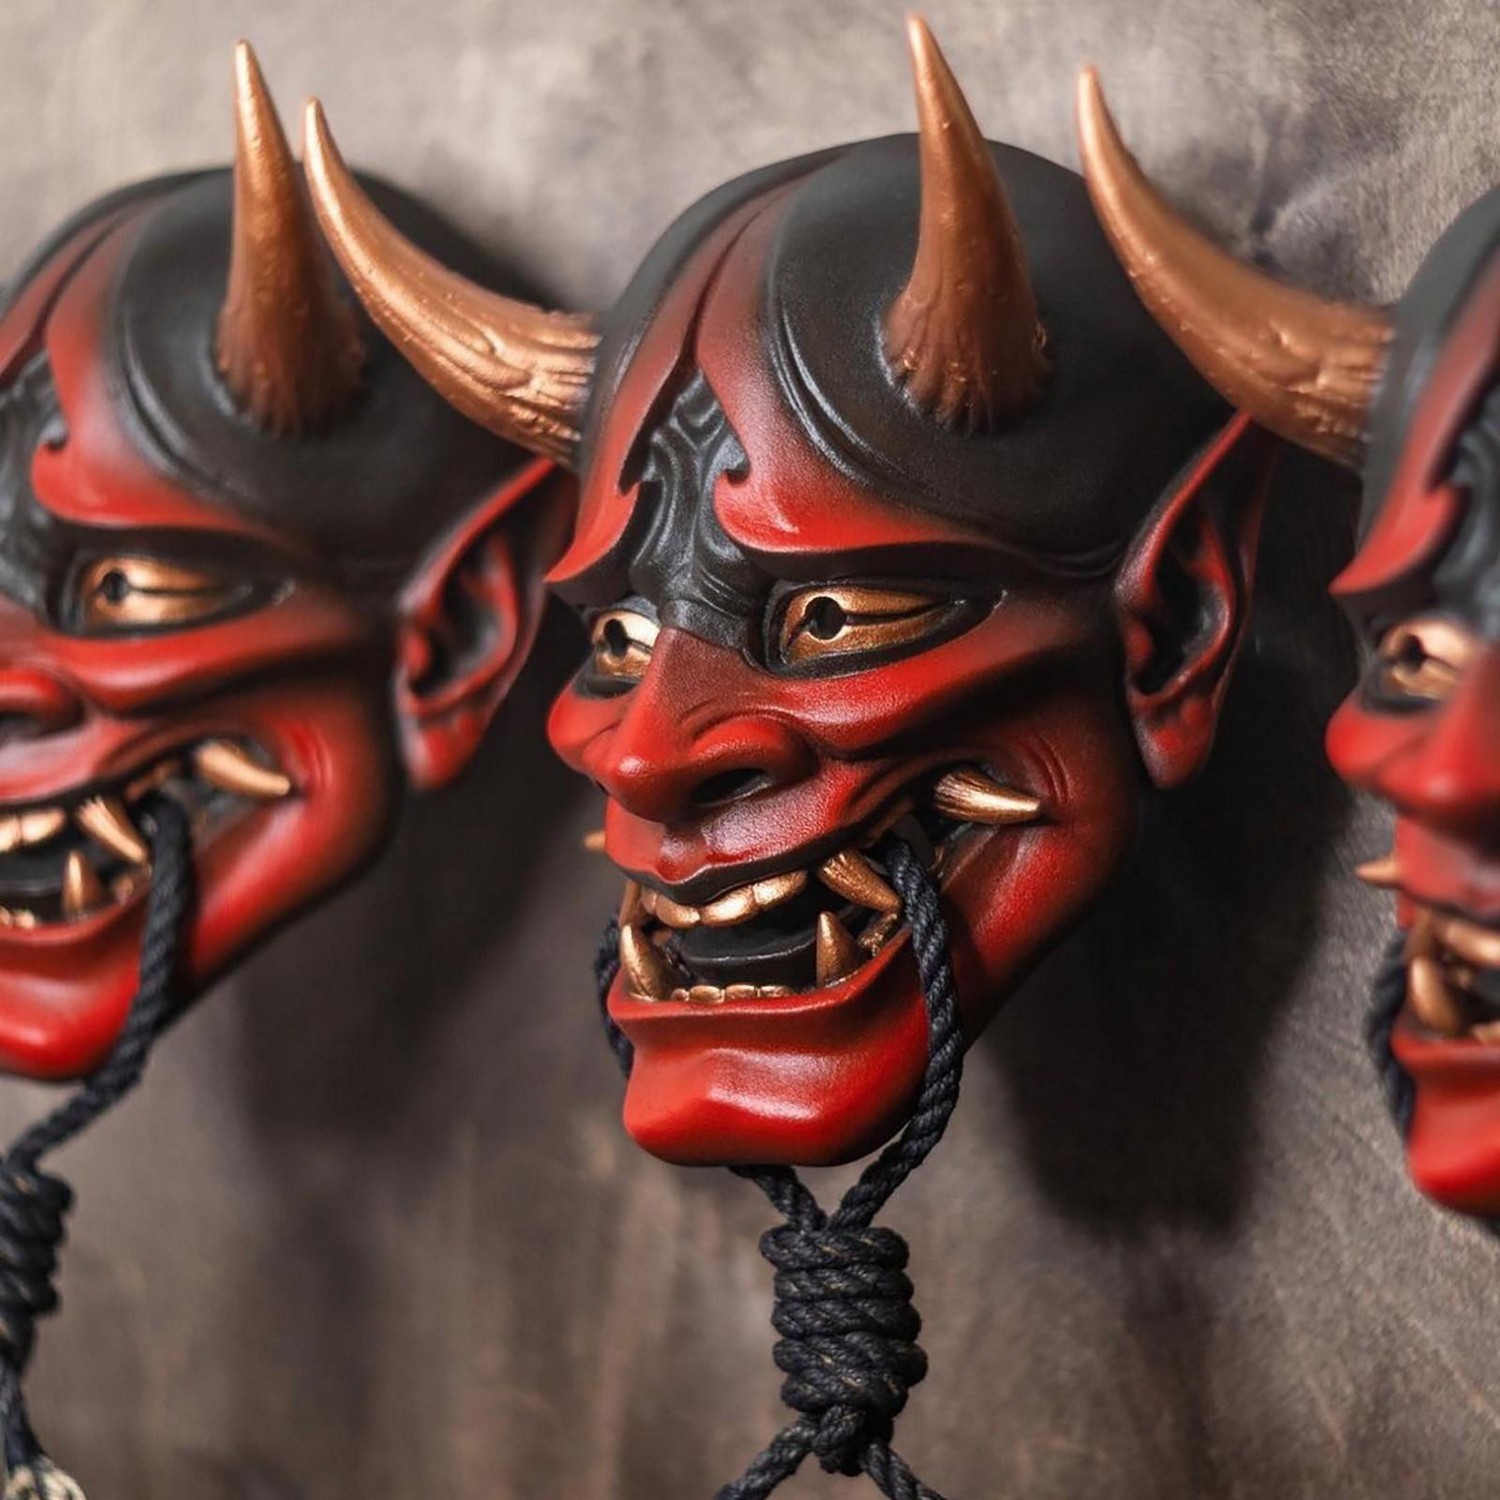 Máscara de cabeza de demonio para Halloween - motivo japonés